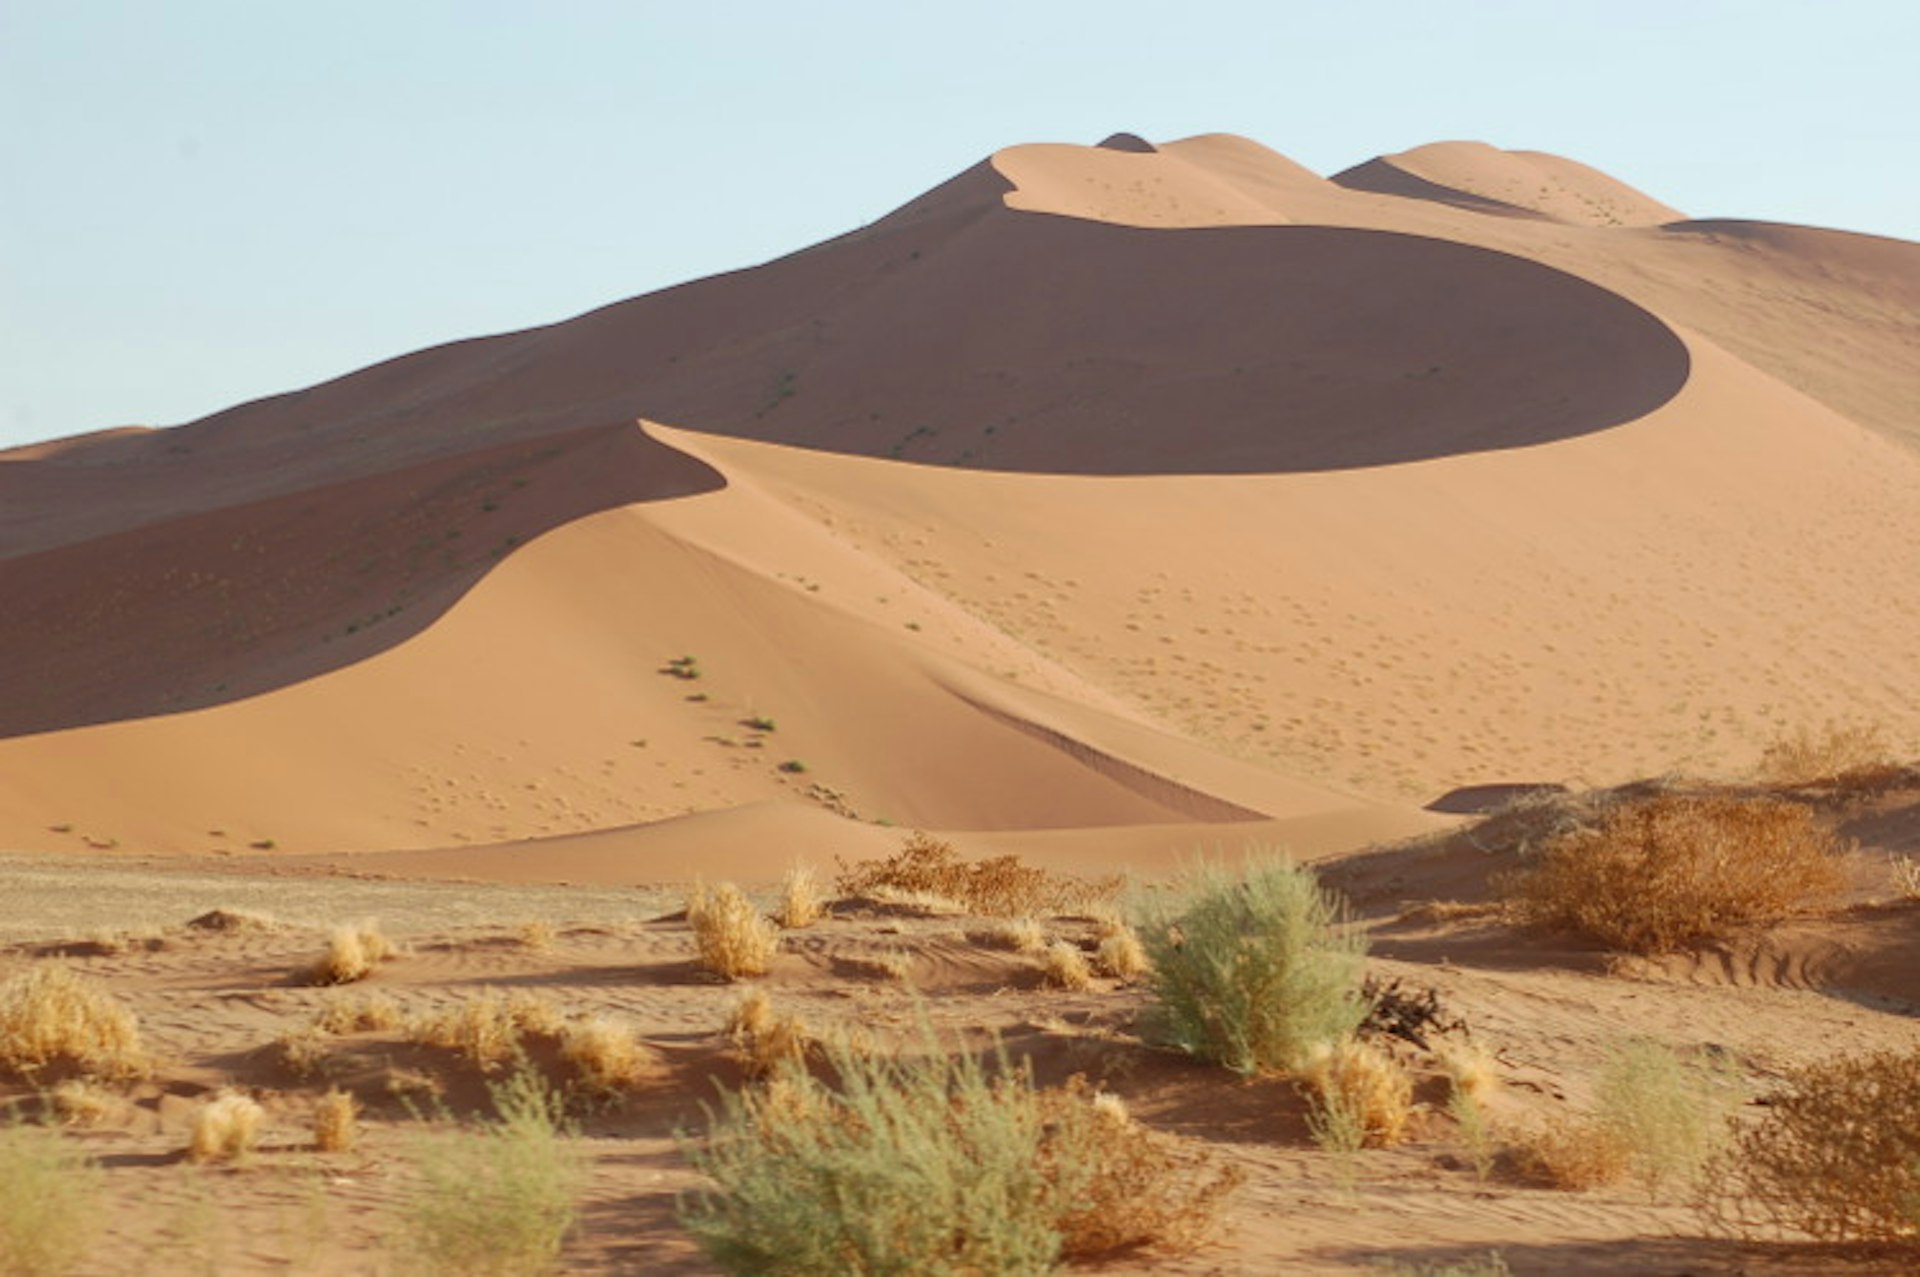 Dunes at Sossusvlei, Namib-Naukluft National Park, Namibia. Image by Joachim Huber / CC BY-SA 2.0